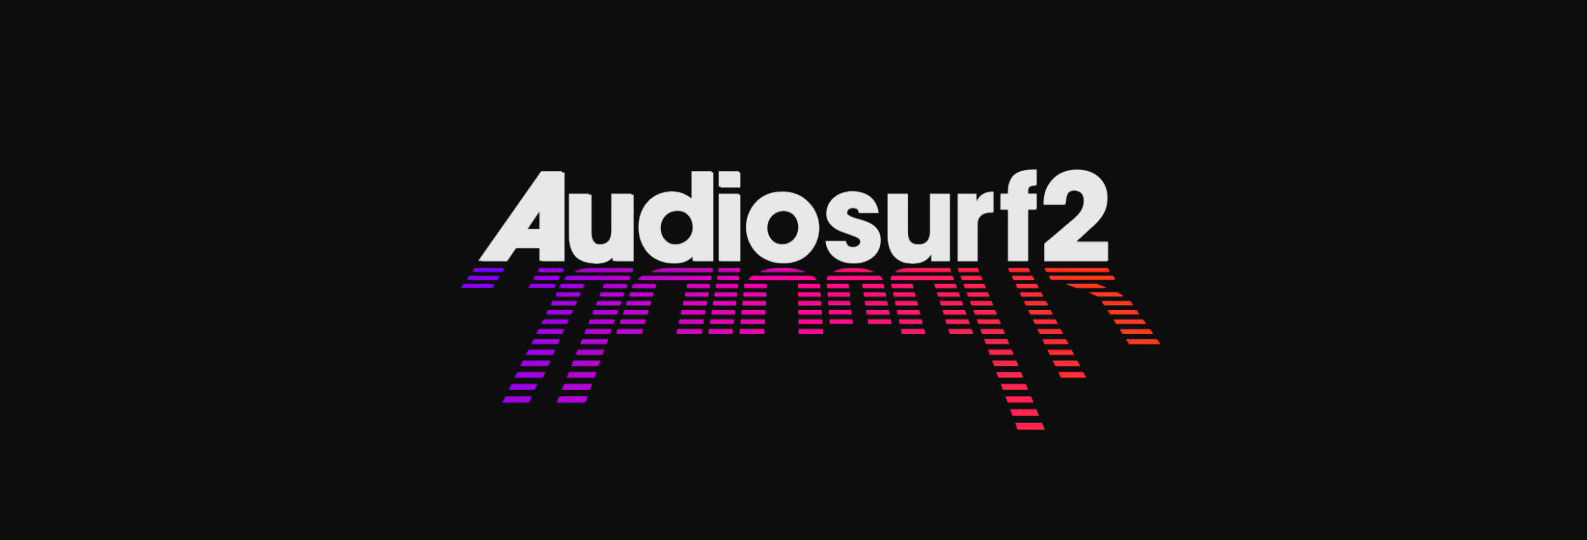 Audiosurf 2 steam not found на пиратке фото 14